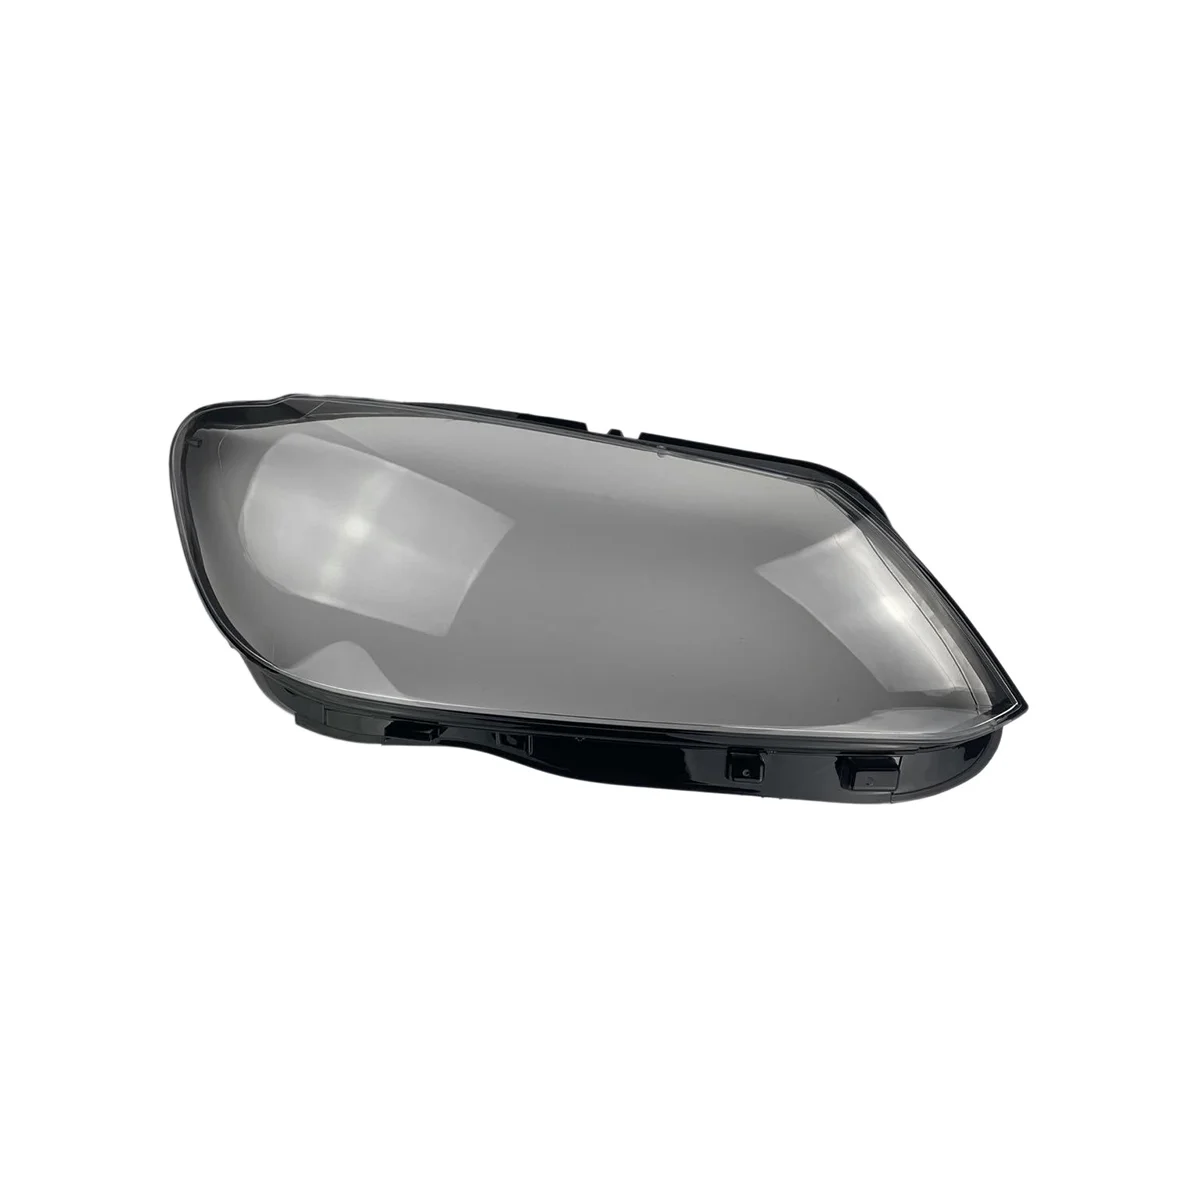 

Right Headlight Cover Transparent Headlight Lens Headlight Shell for Touran 2011-2015